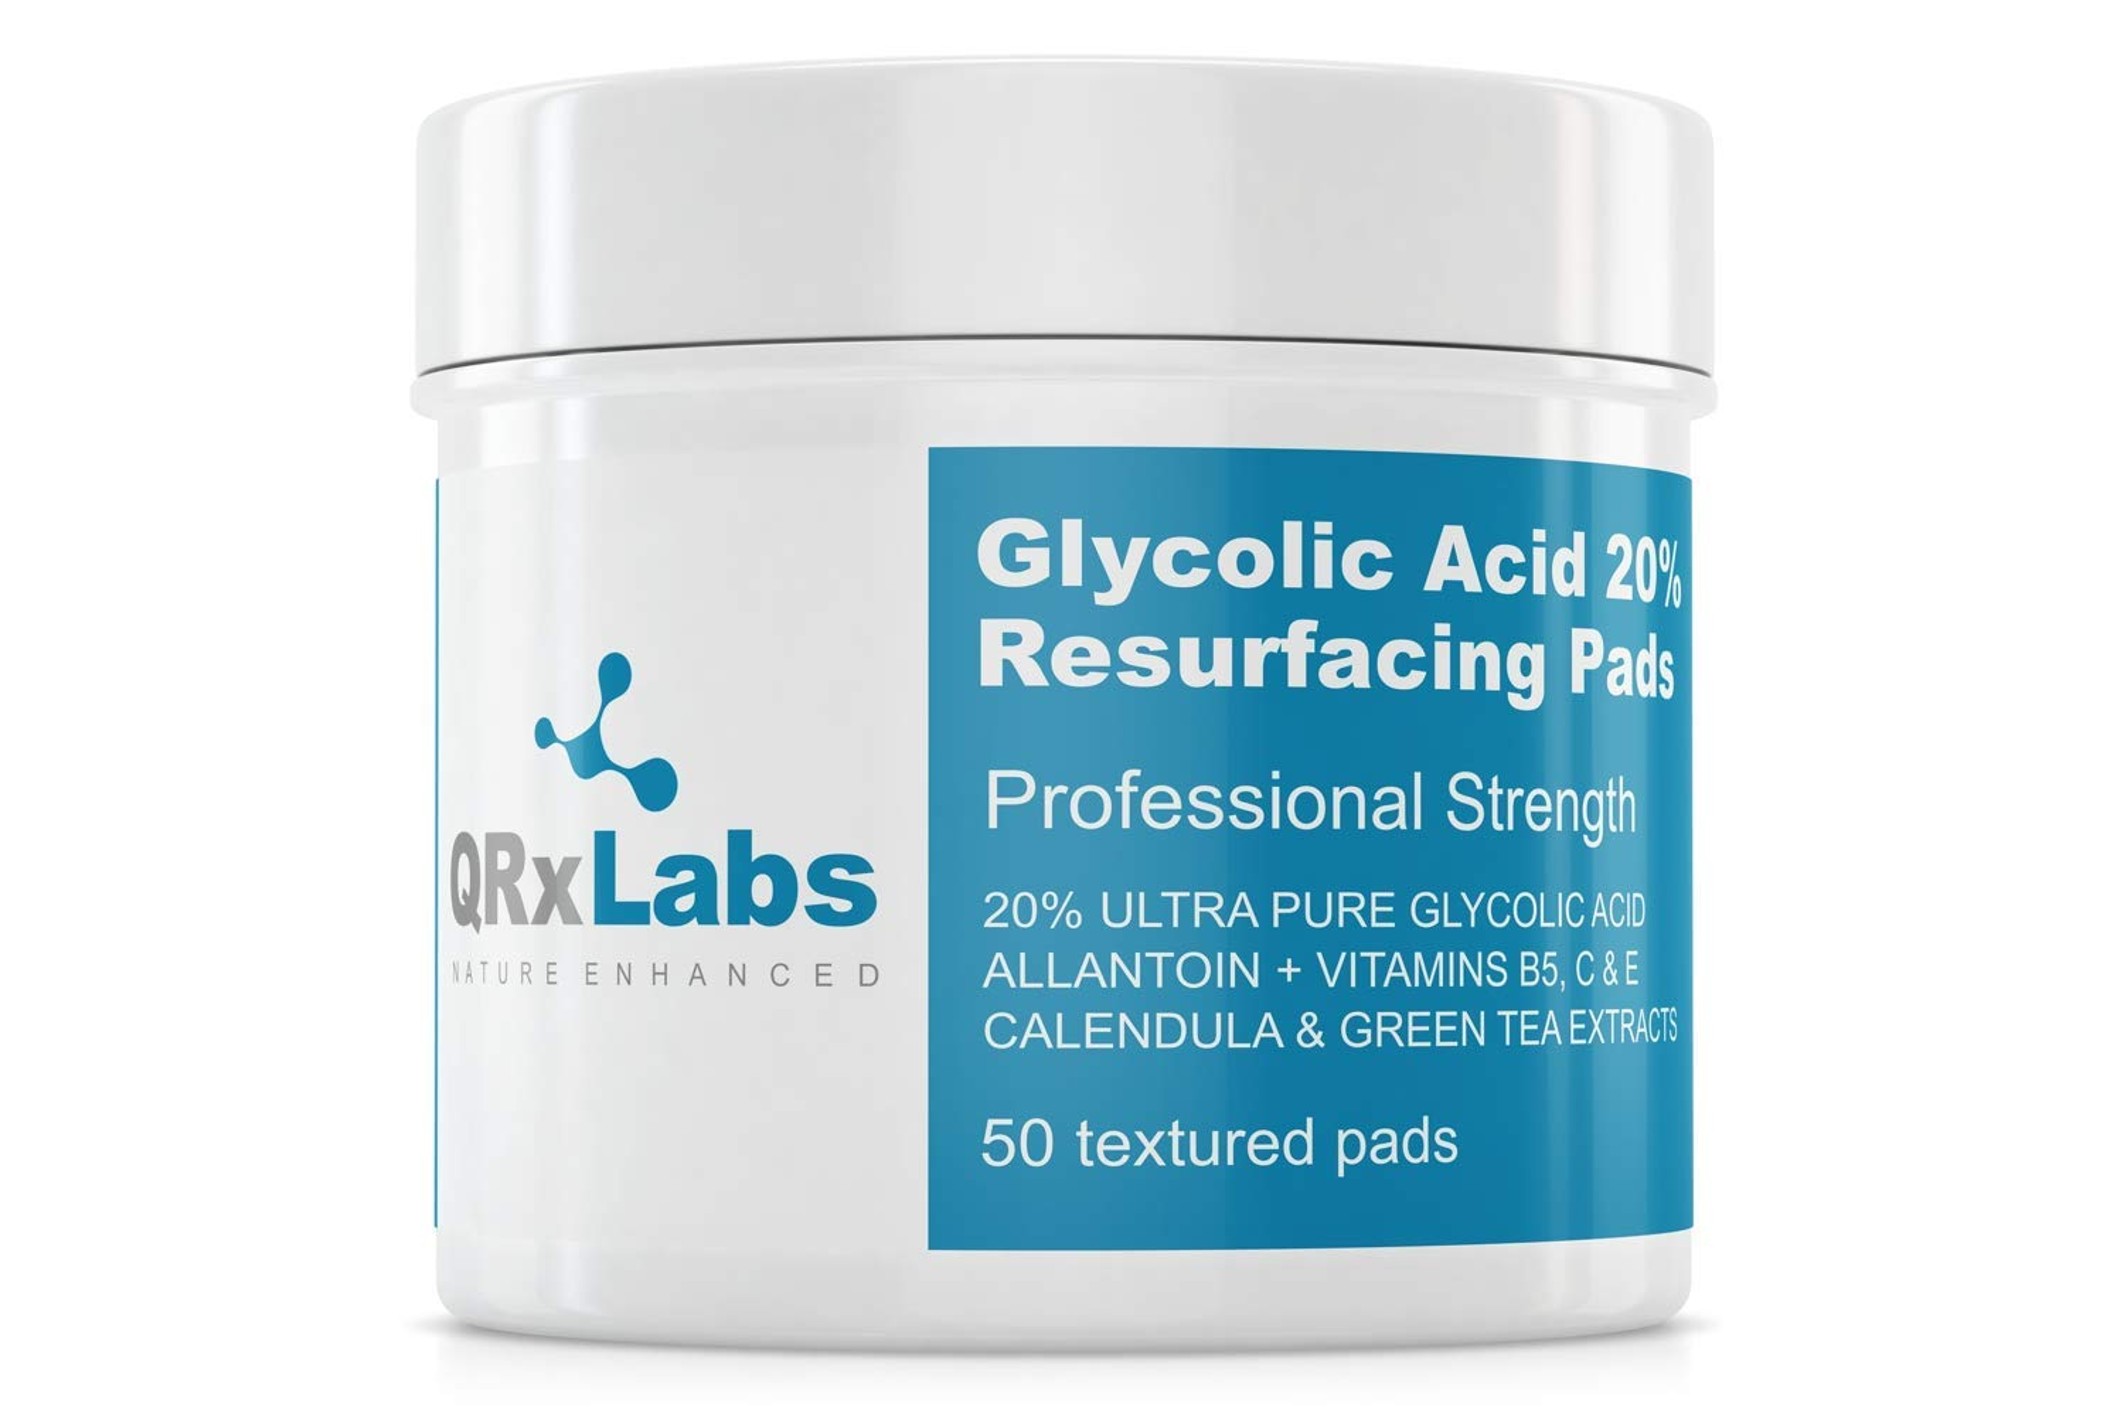 qrxlabs glycolic acid